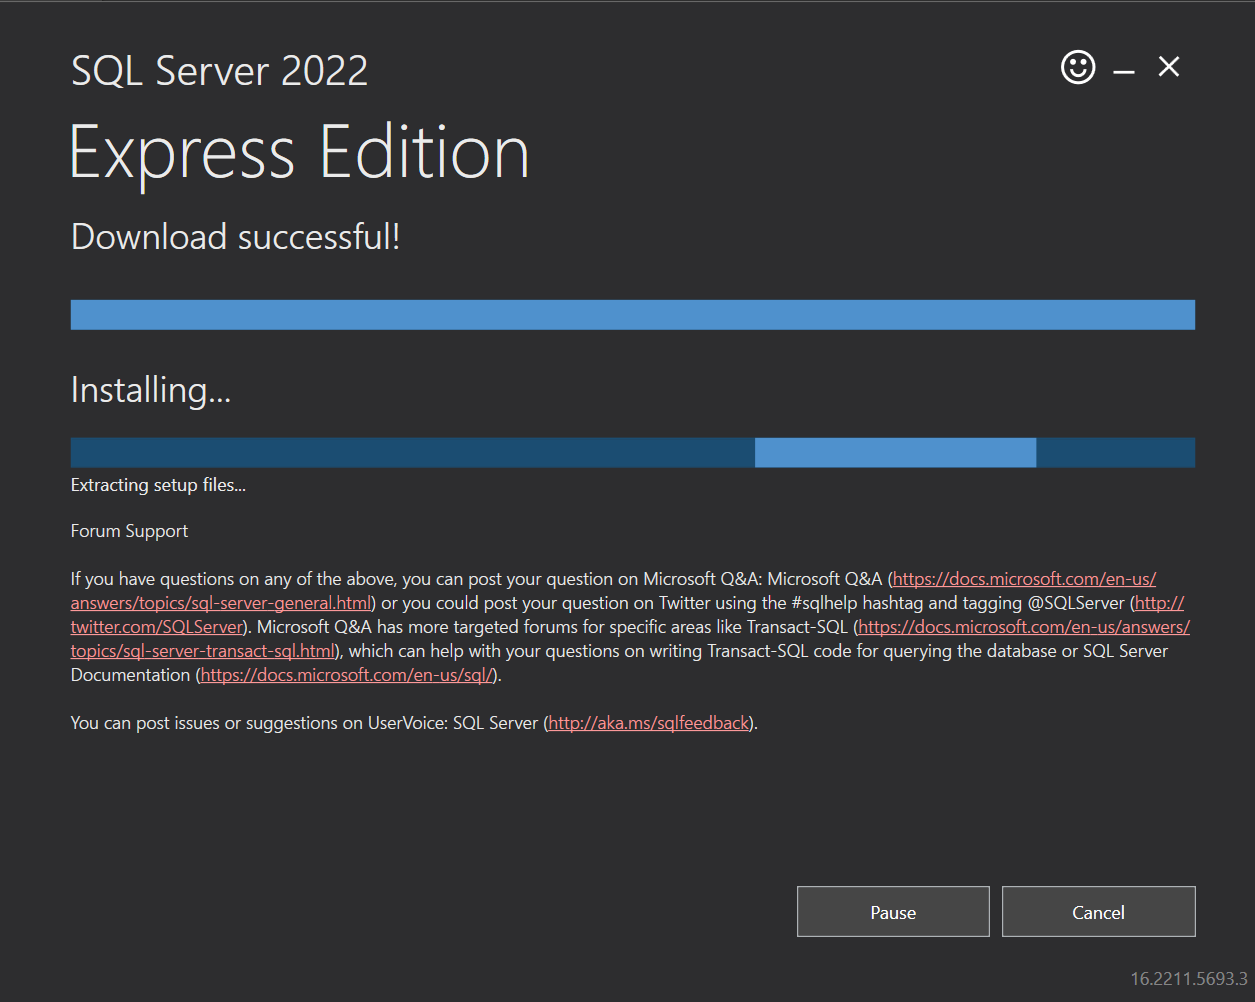 Installation in progress of SQL Server 2022 Express log file